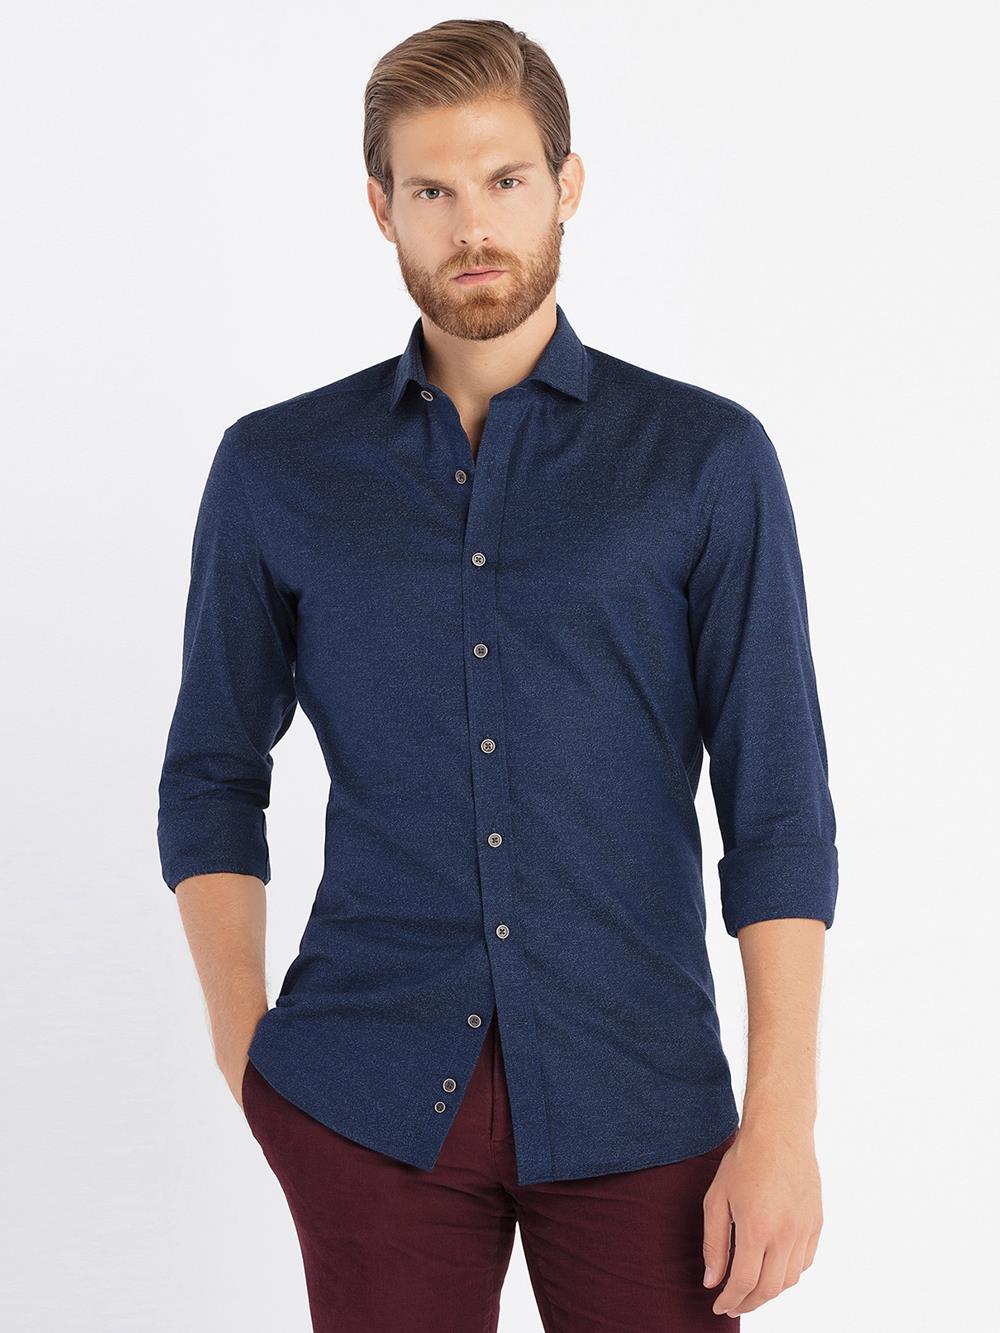 Douglas navy flannel shirt